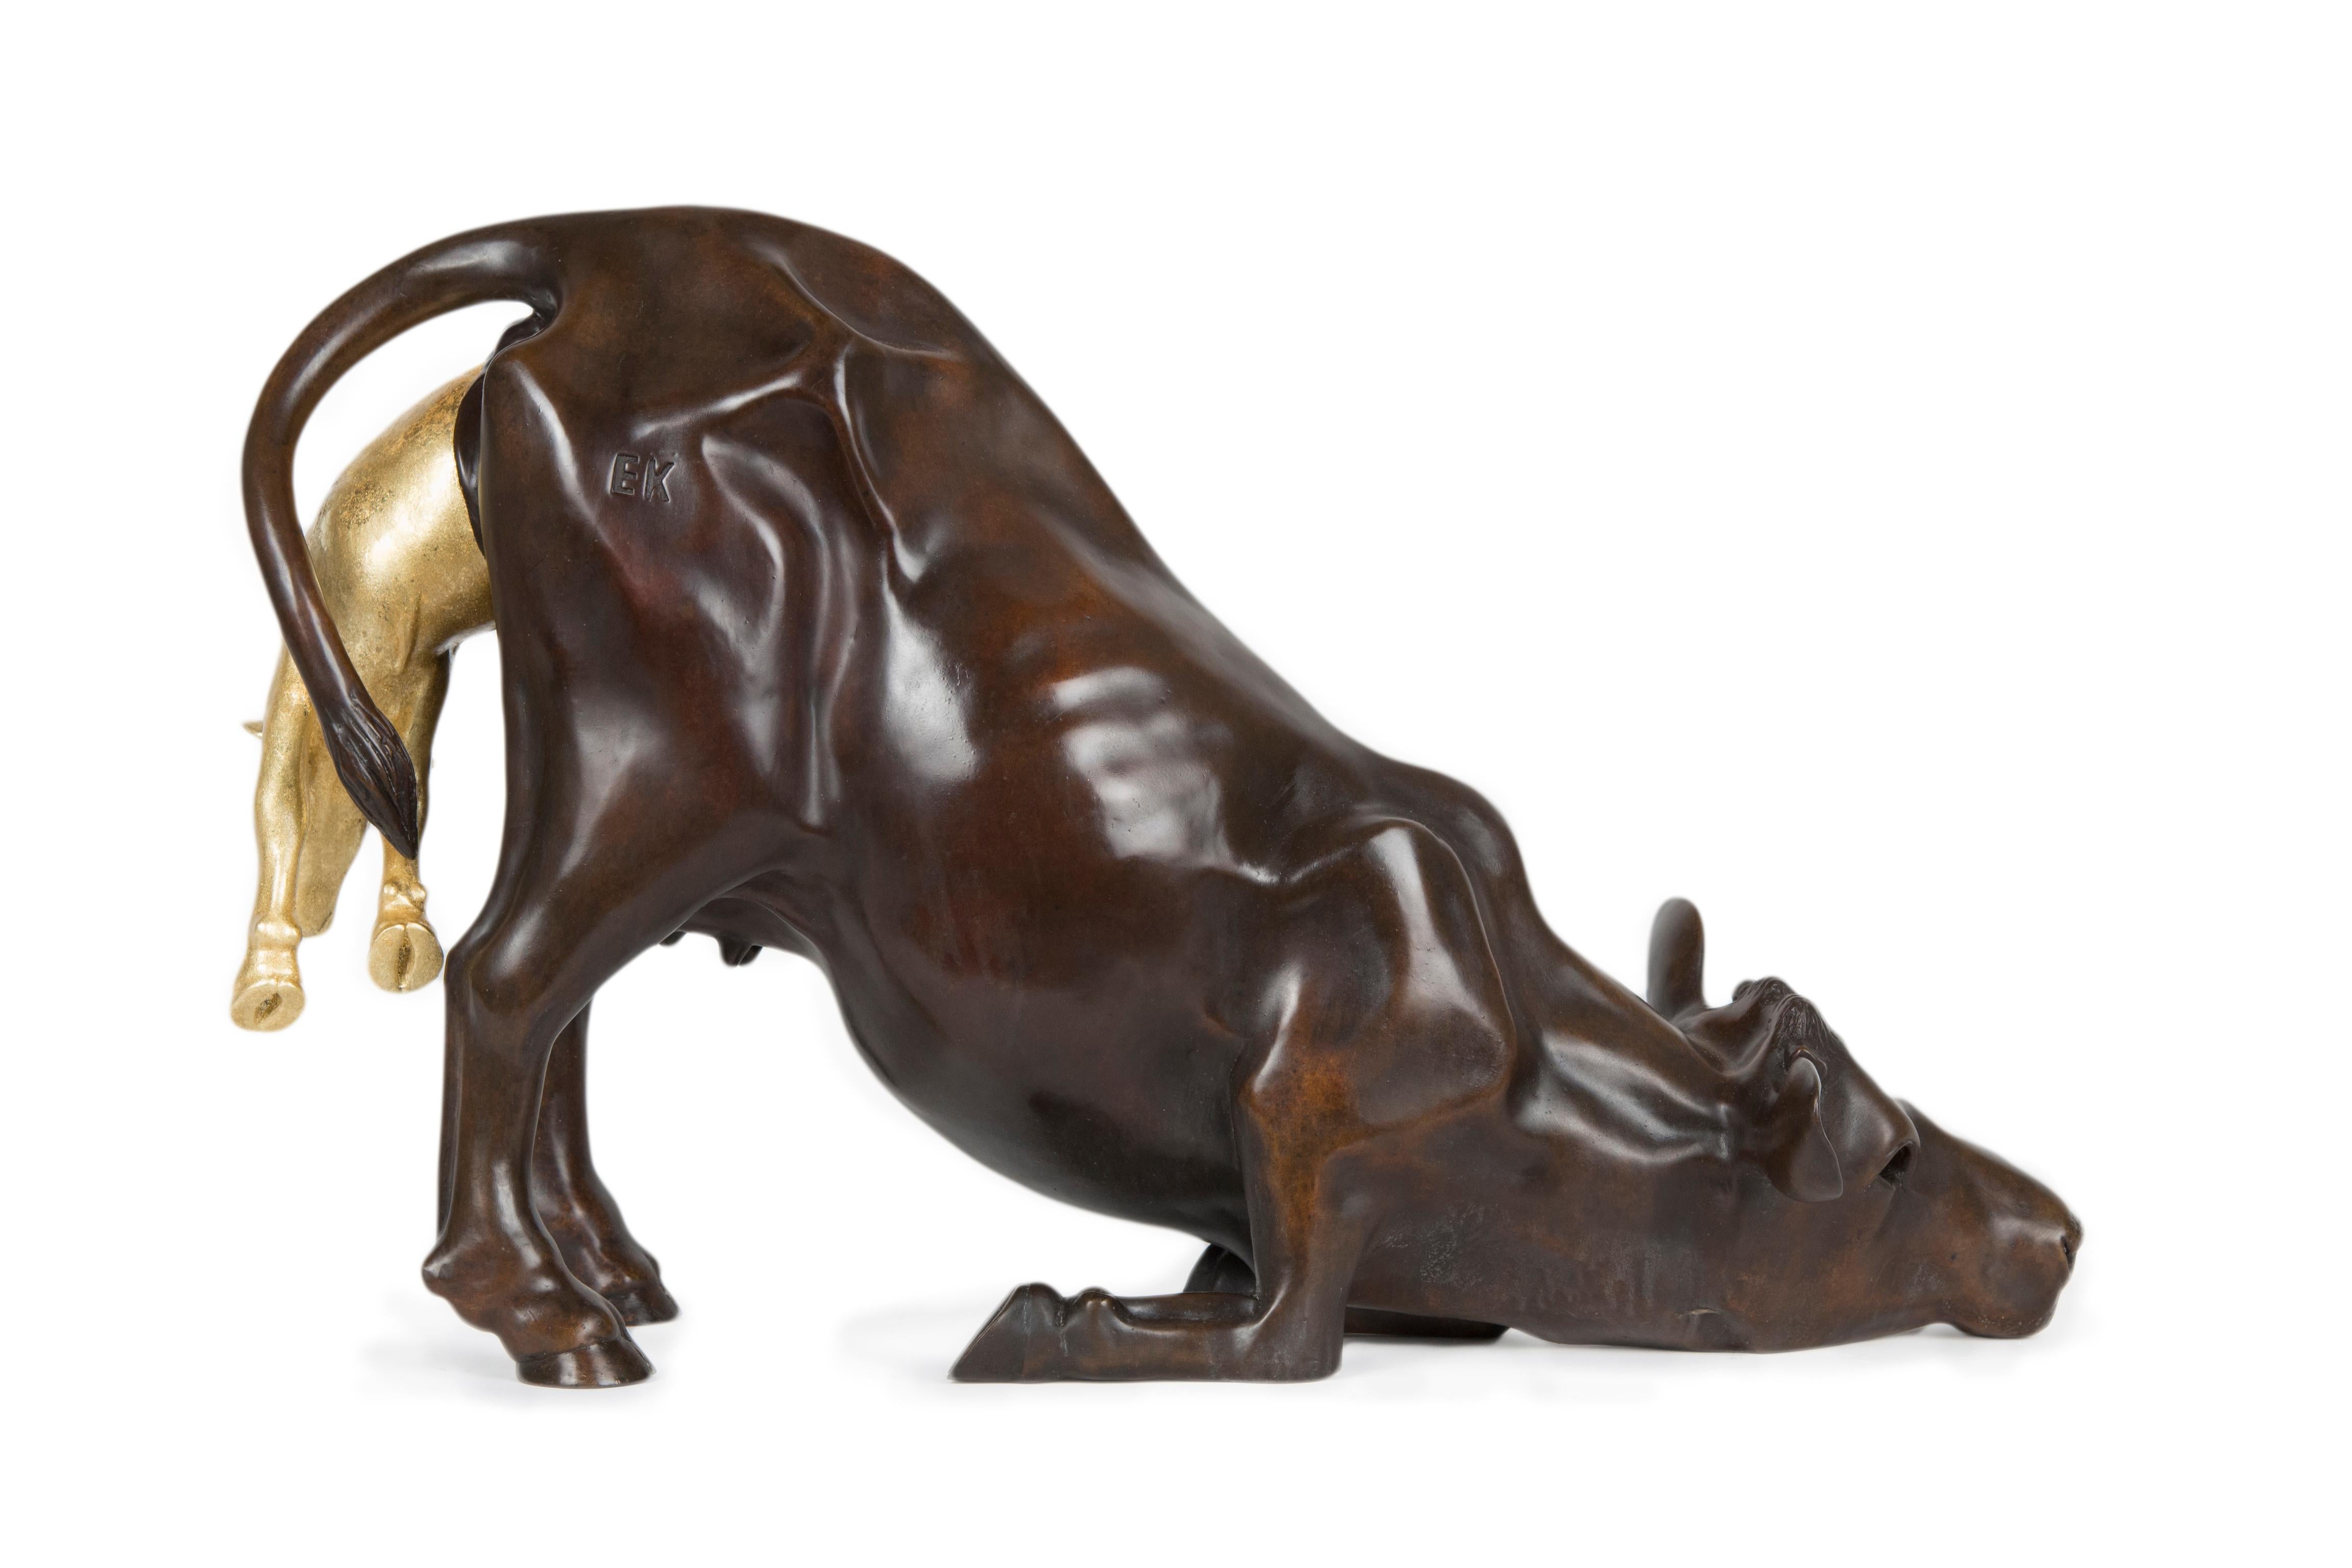 Elliot Kayser
Stock Split
15”H x 24” W x 7” D
2016
Bronze, gold leaf
53.5 lbs
Unique.